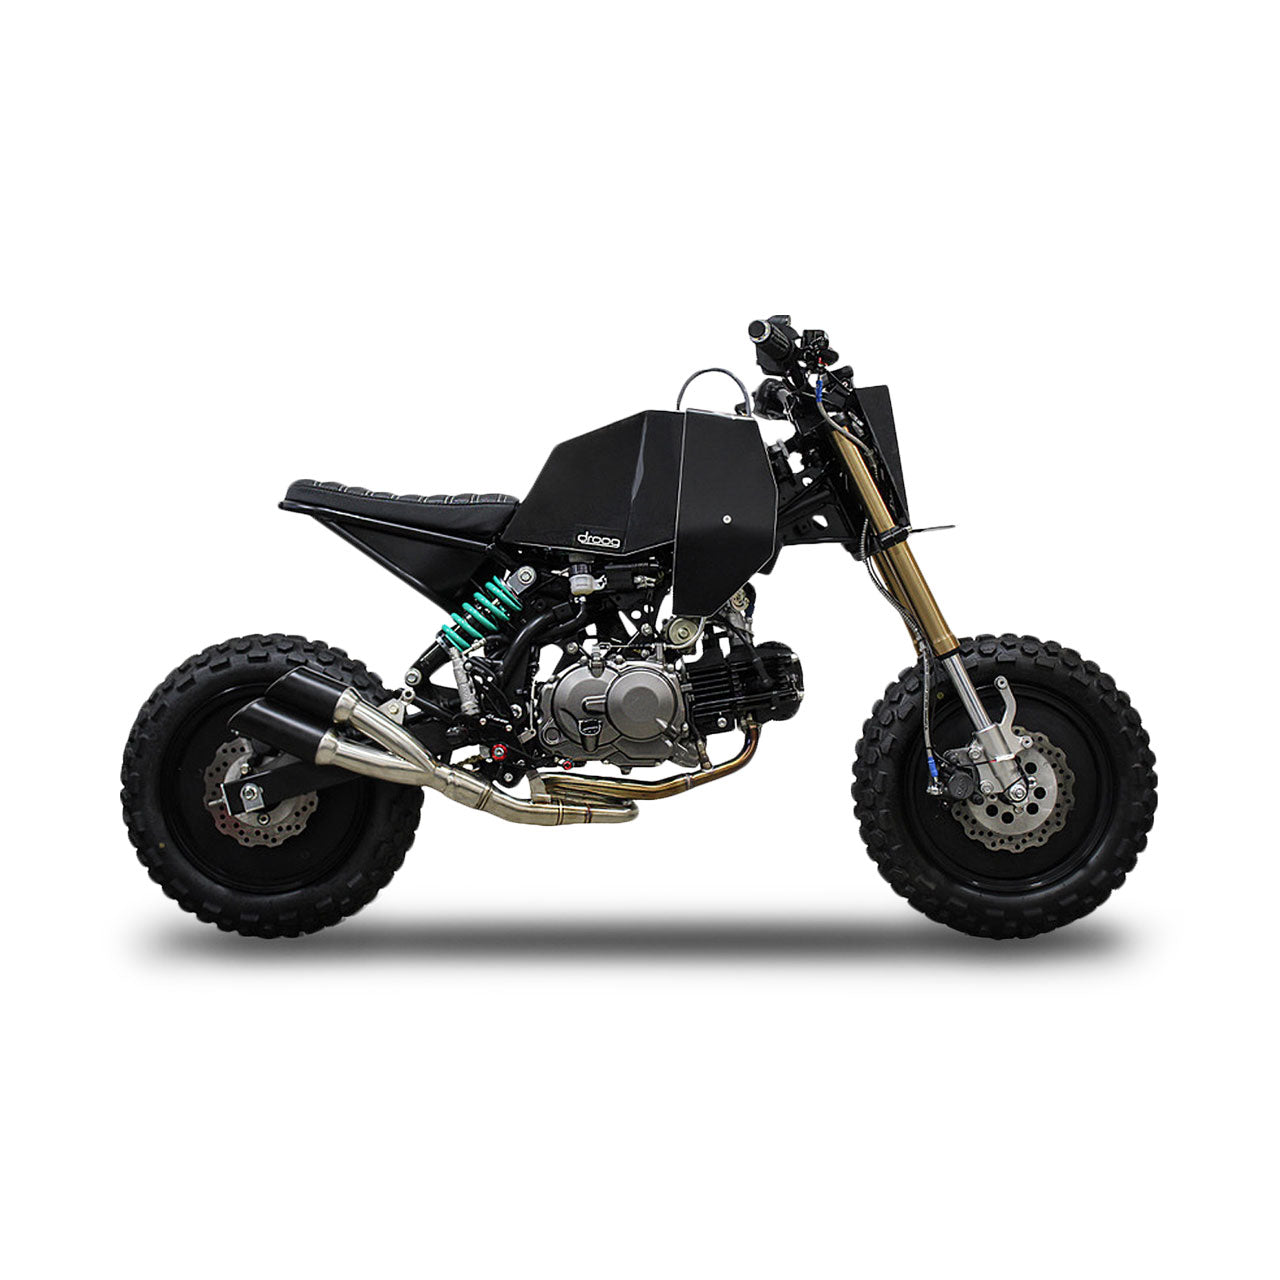 Droog Moto Mini-Fighter Motorcycle